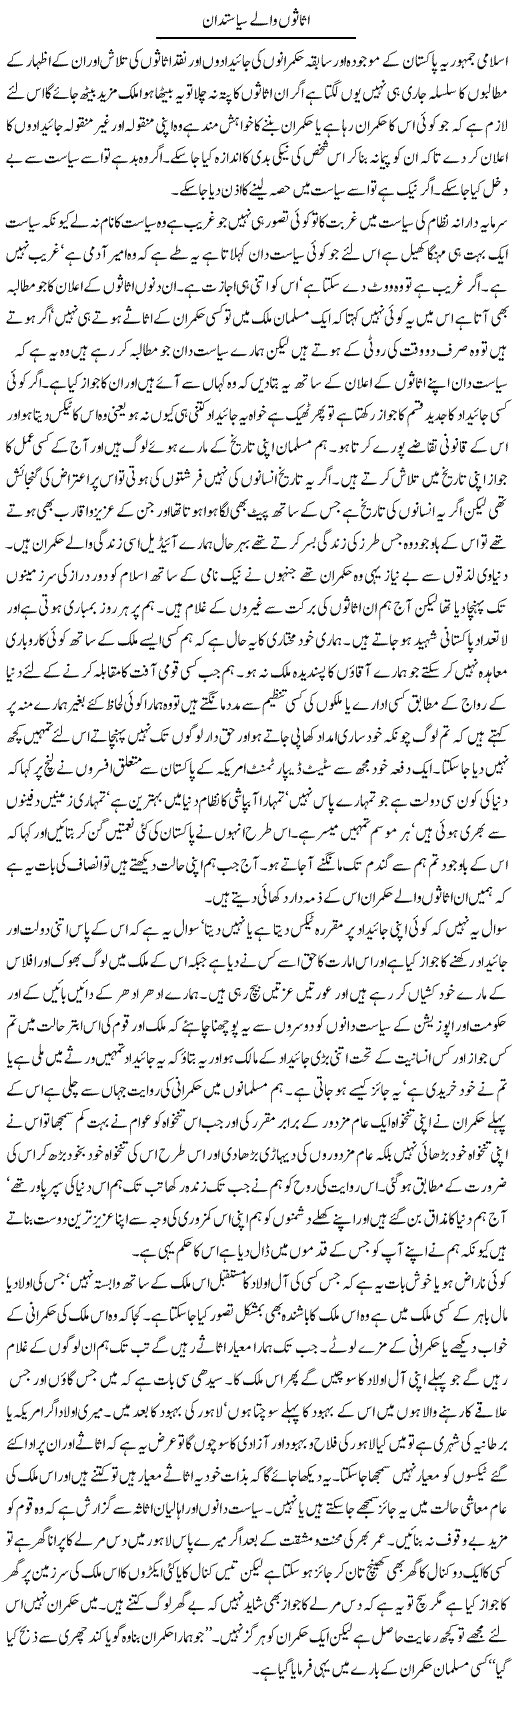 Assets of Politicians Express Column Abdul Qadir 27 November 2011